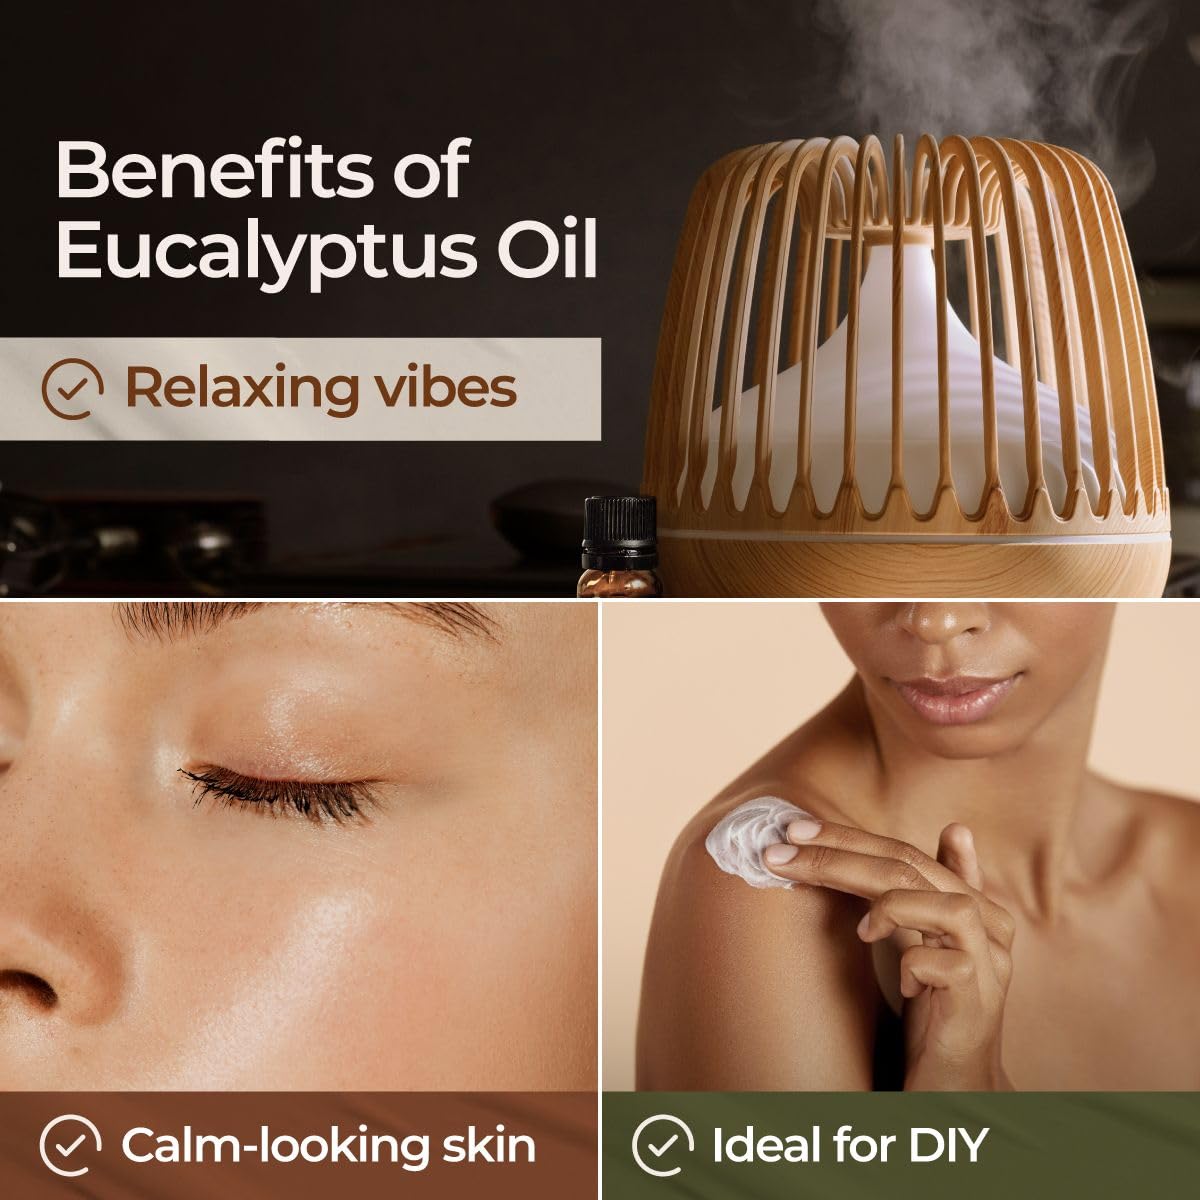 Gya Labs Eucalyptus Essential Oil - 100% Natural Eucalyptus Oil Essential Oils for Diffuser, Skin, Humidifier & Hair (0.34 fl oz)